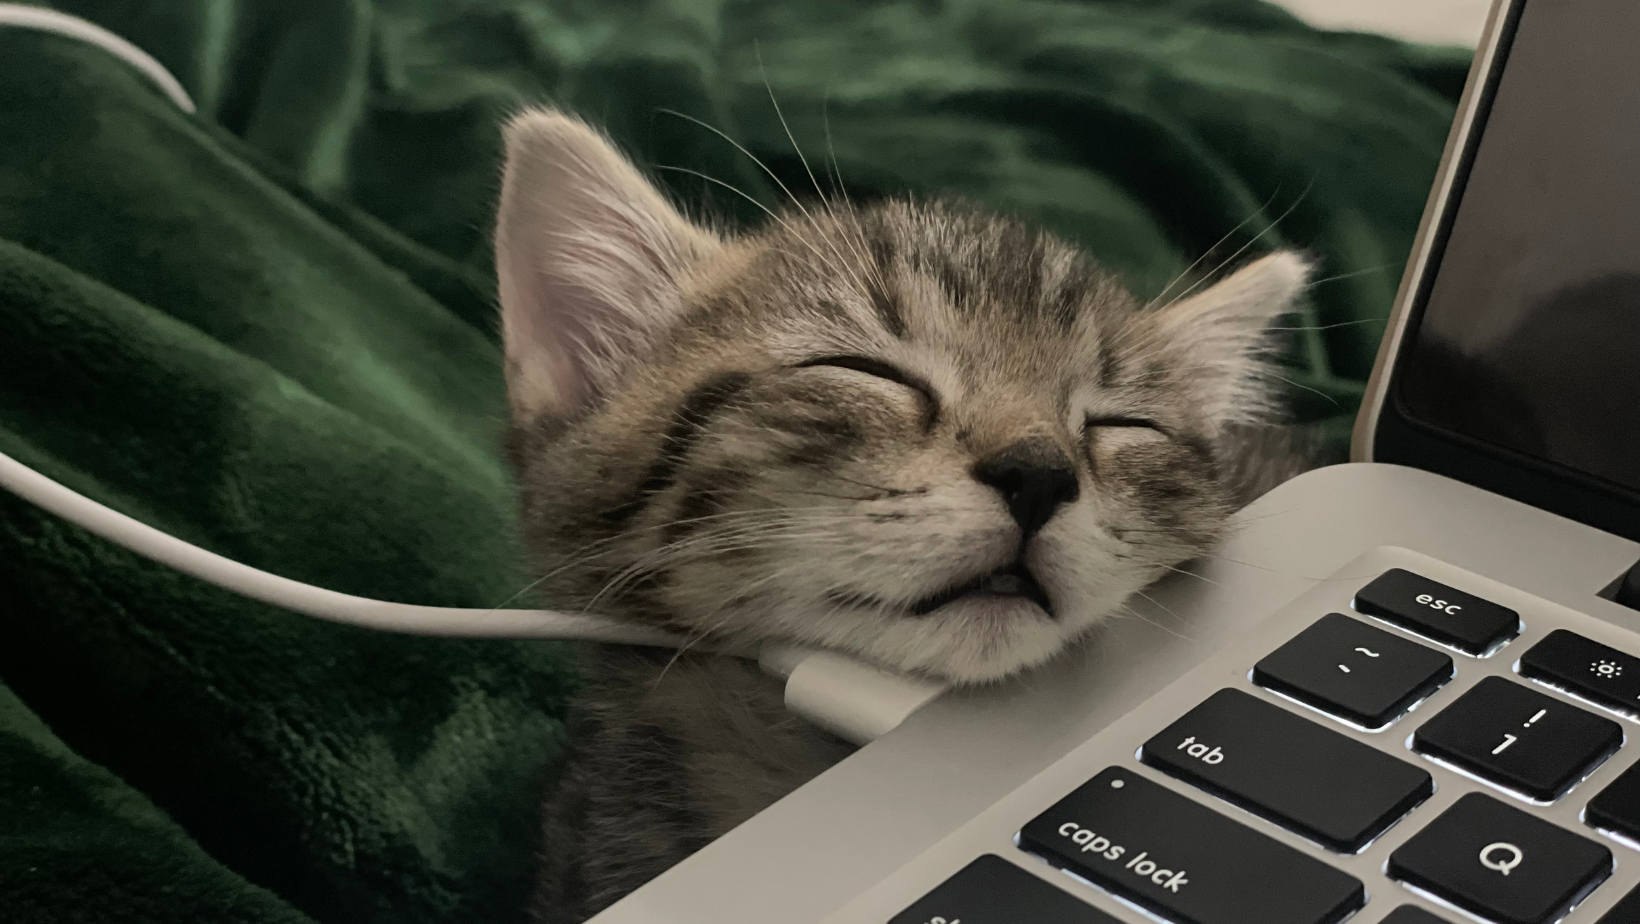 Cat on Laptop